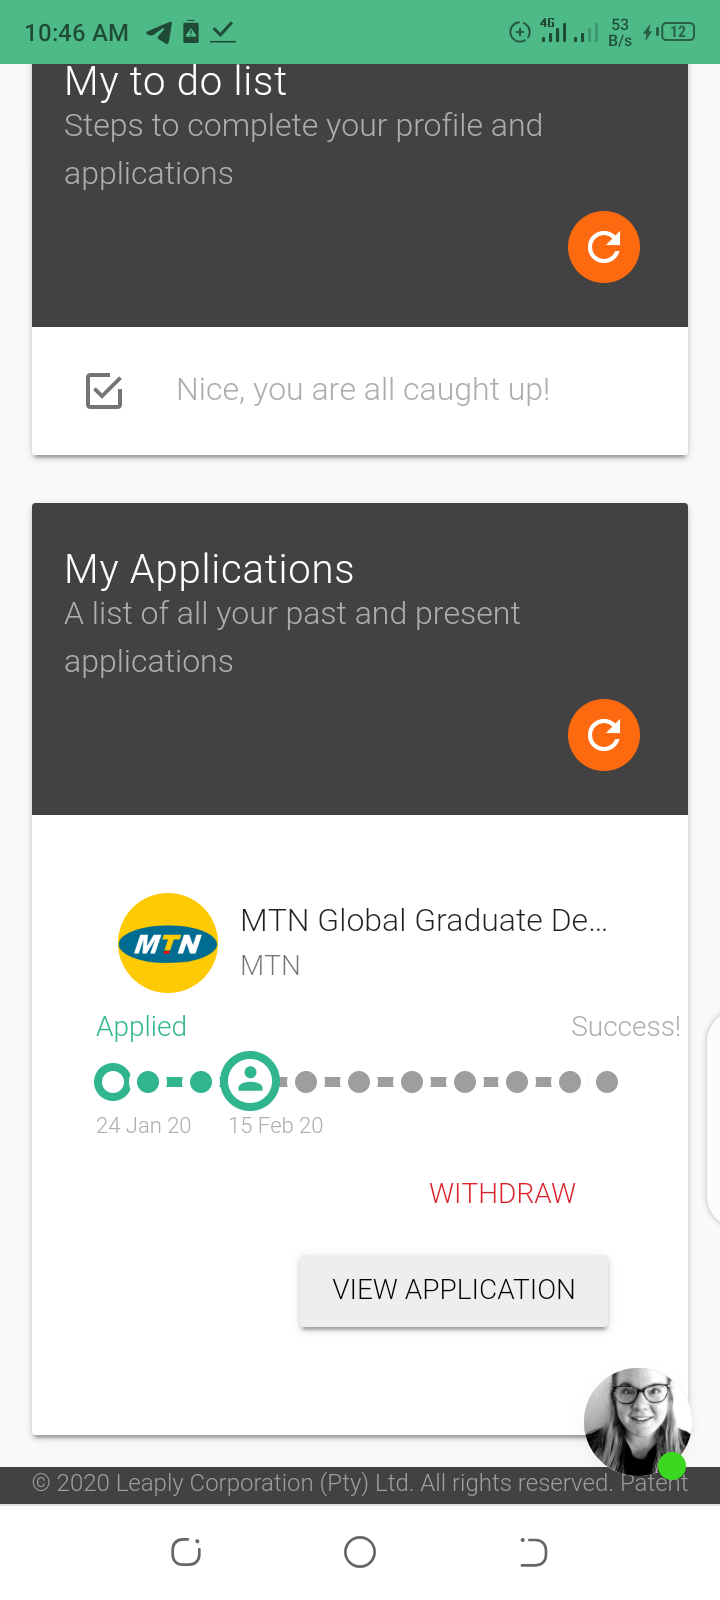 mtn-graduate-development-programme-aptitude-test-invite-jobs-vacancies-14-nigeria